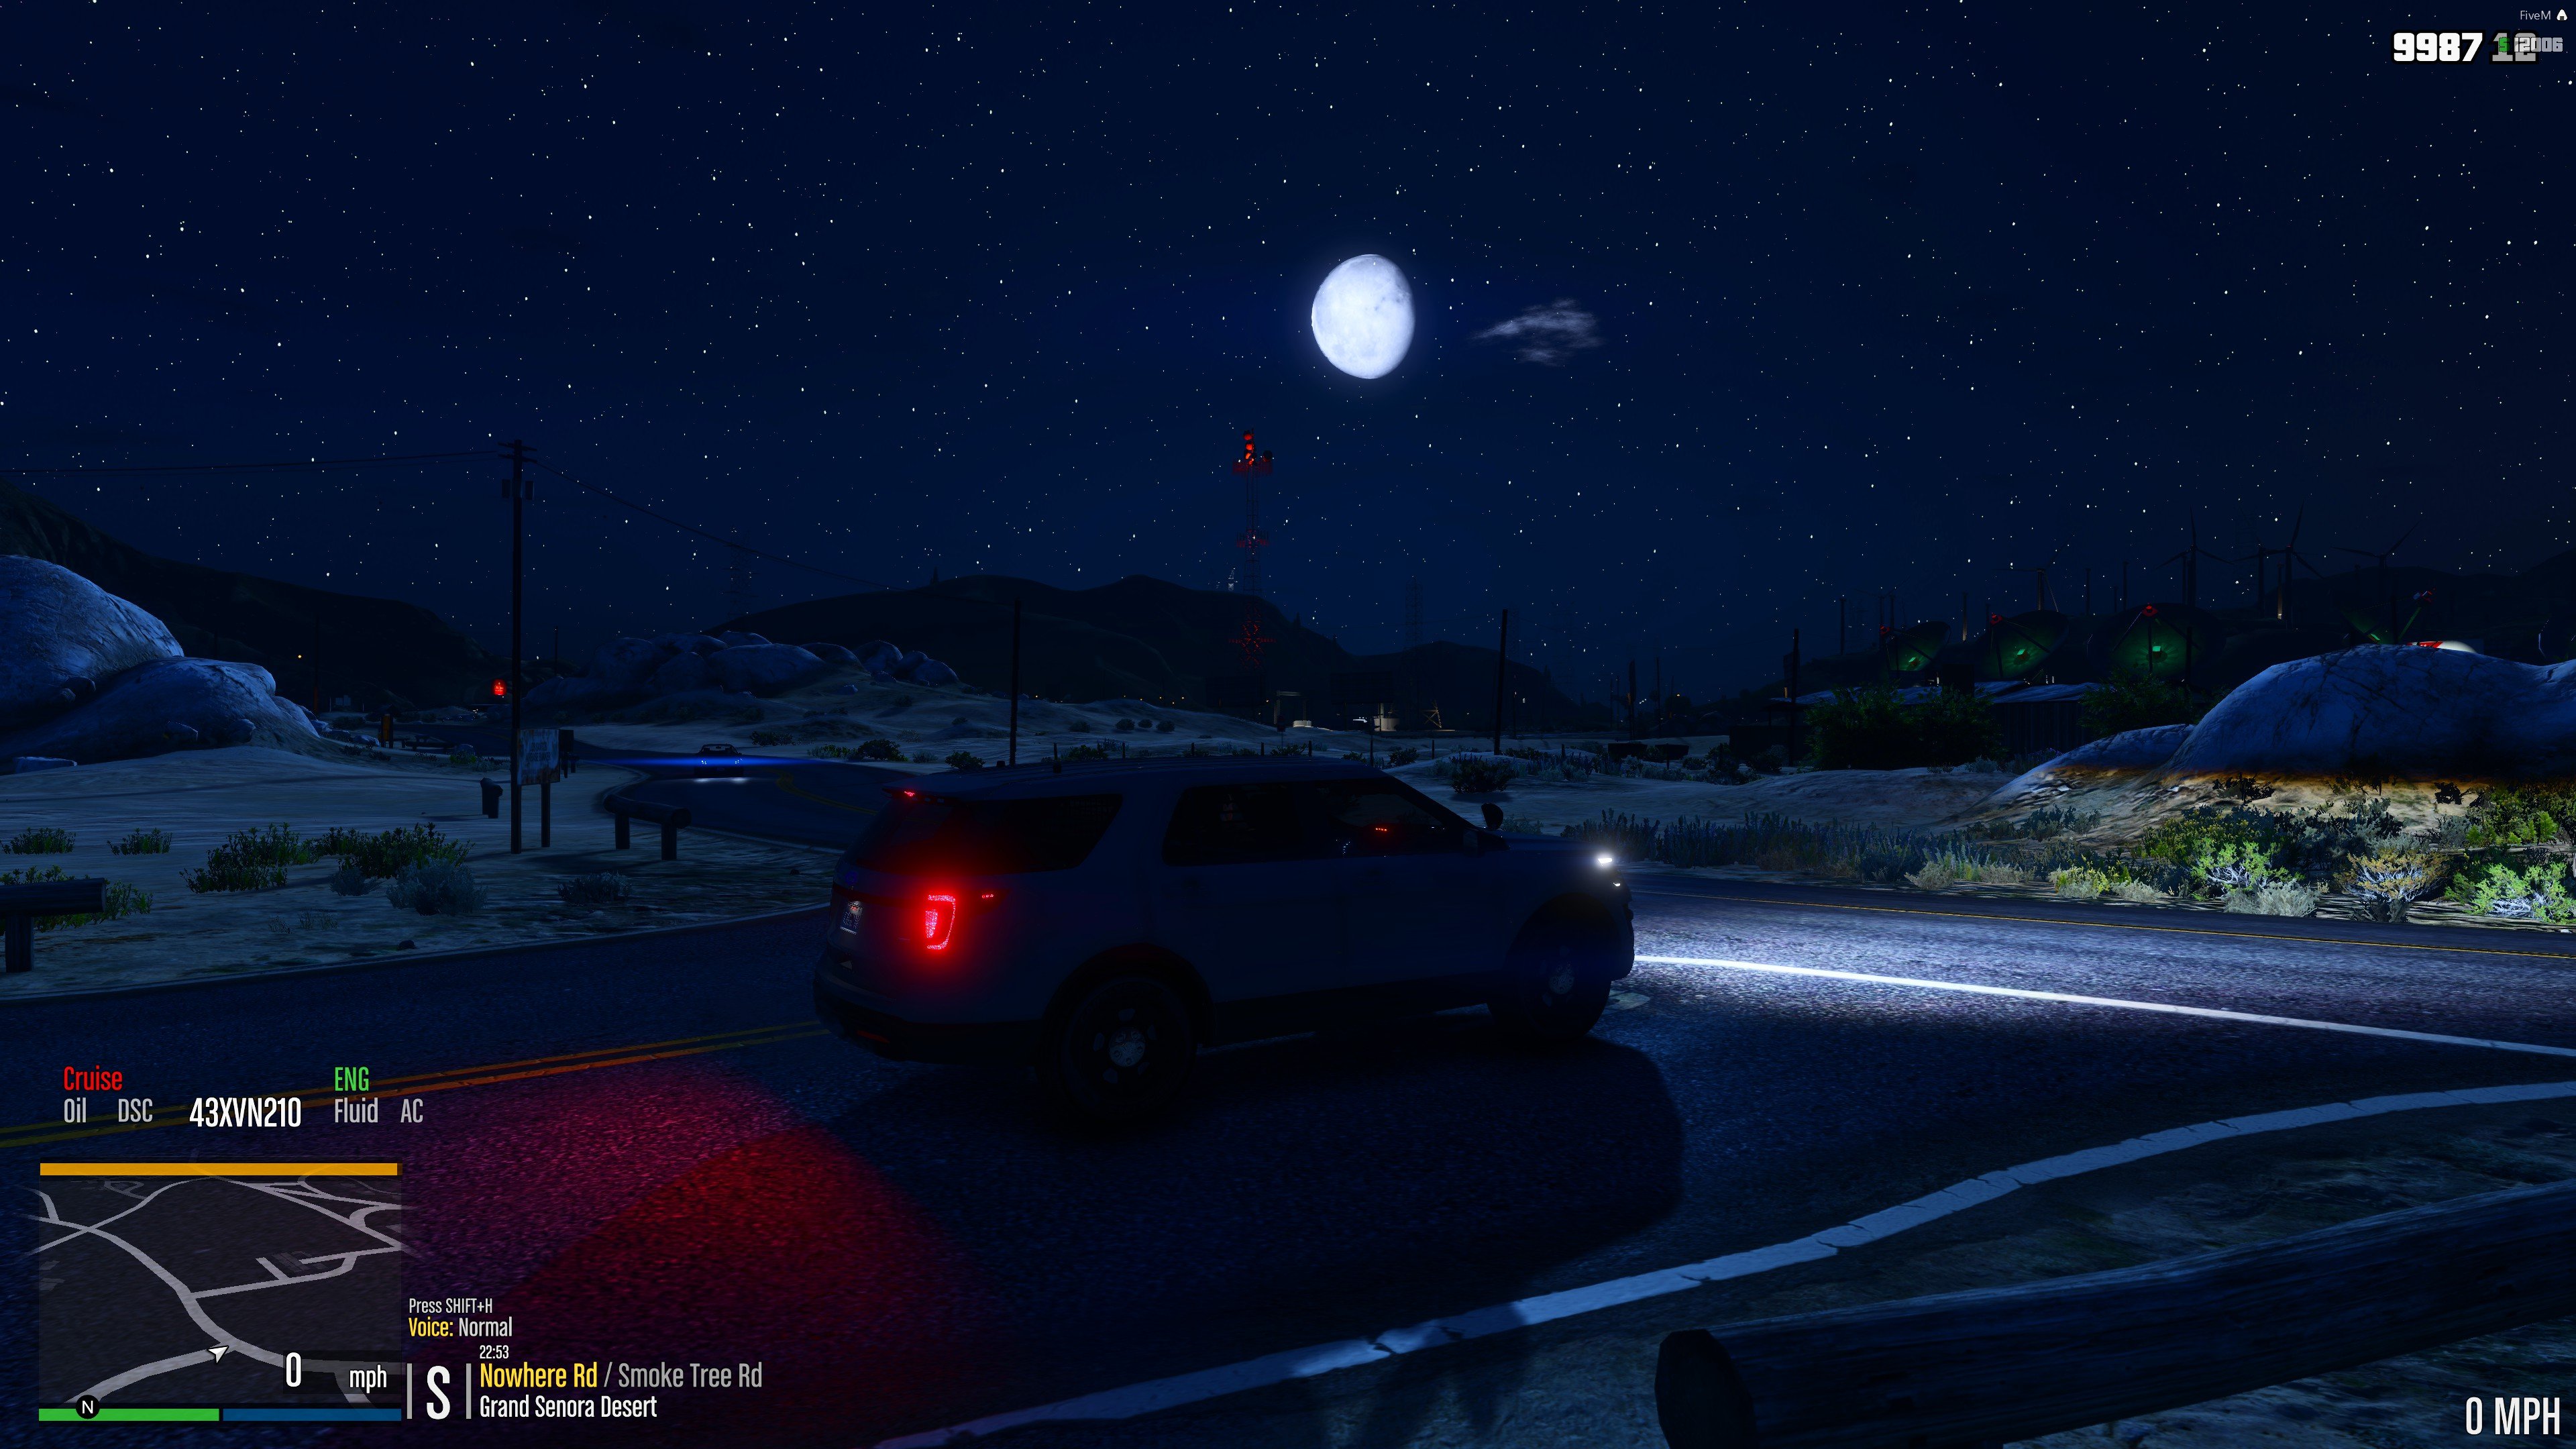 Night patrol. Look at all those stars!